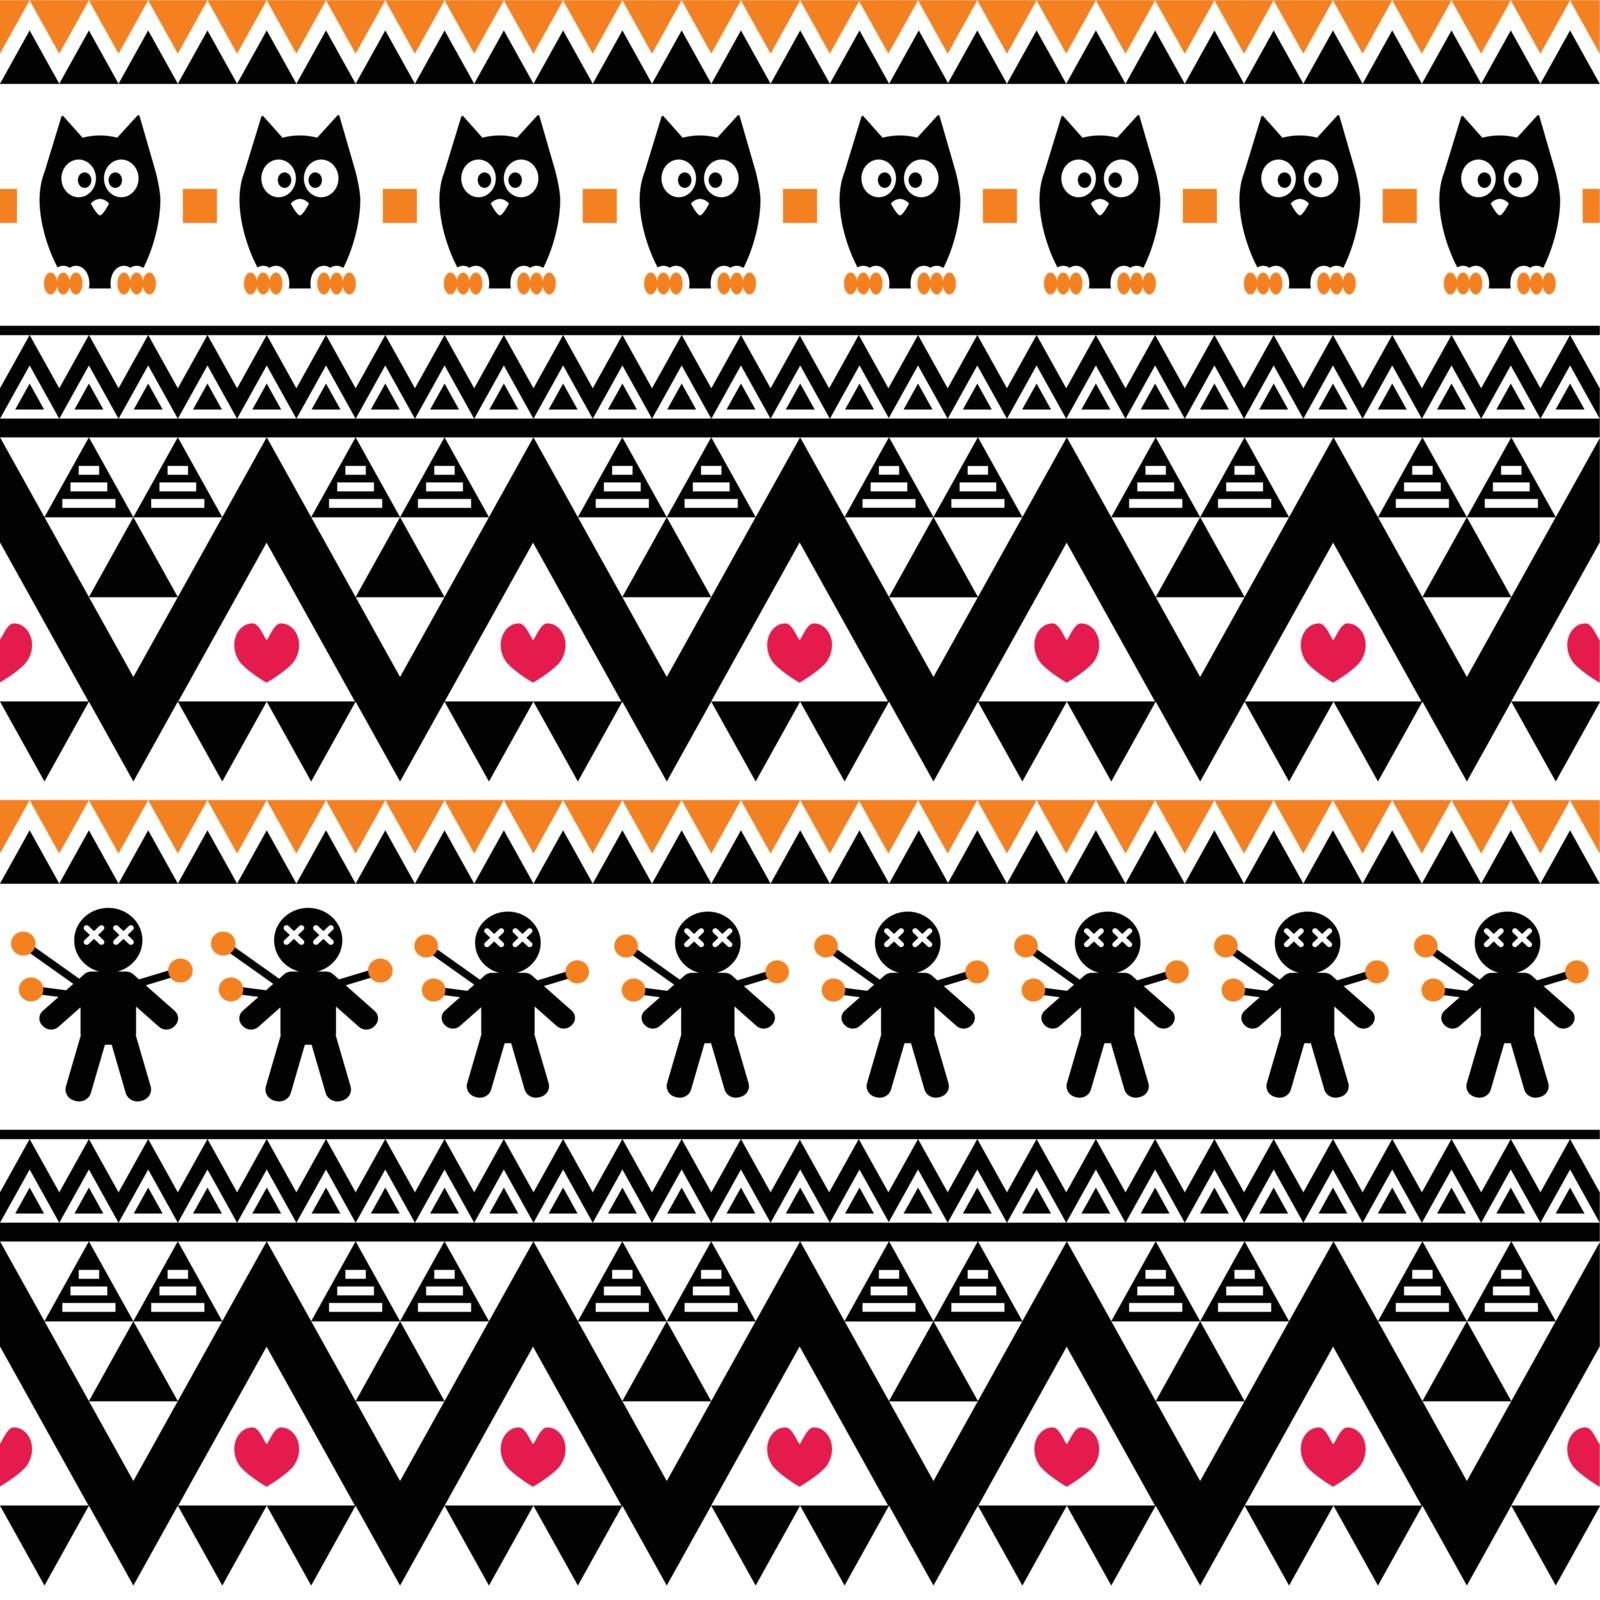 Halloween seamless pattern - tribal, Aztec print style by RedKoala